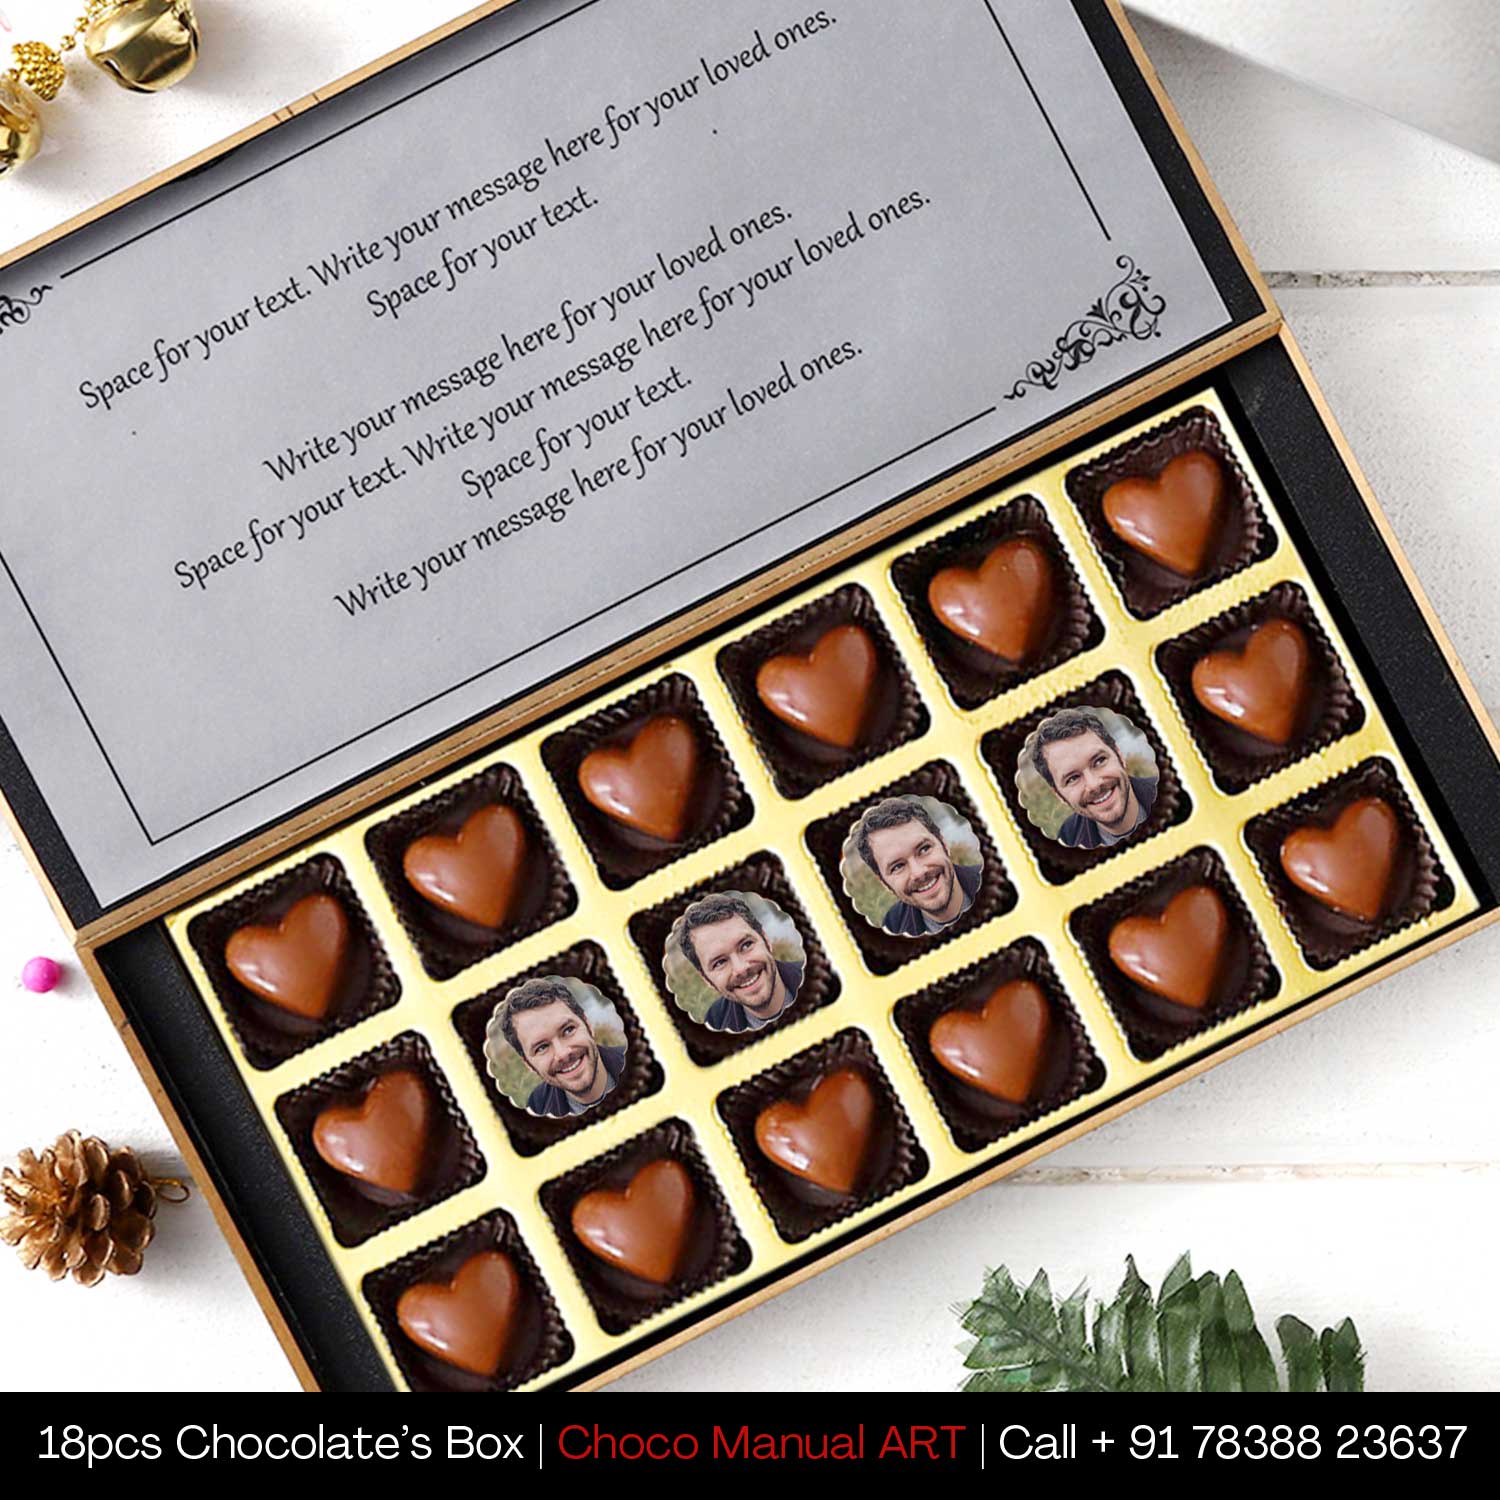 Happy Valentine's Day Personalised Chocolate Box gift Box